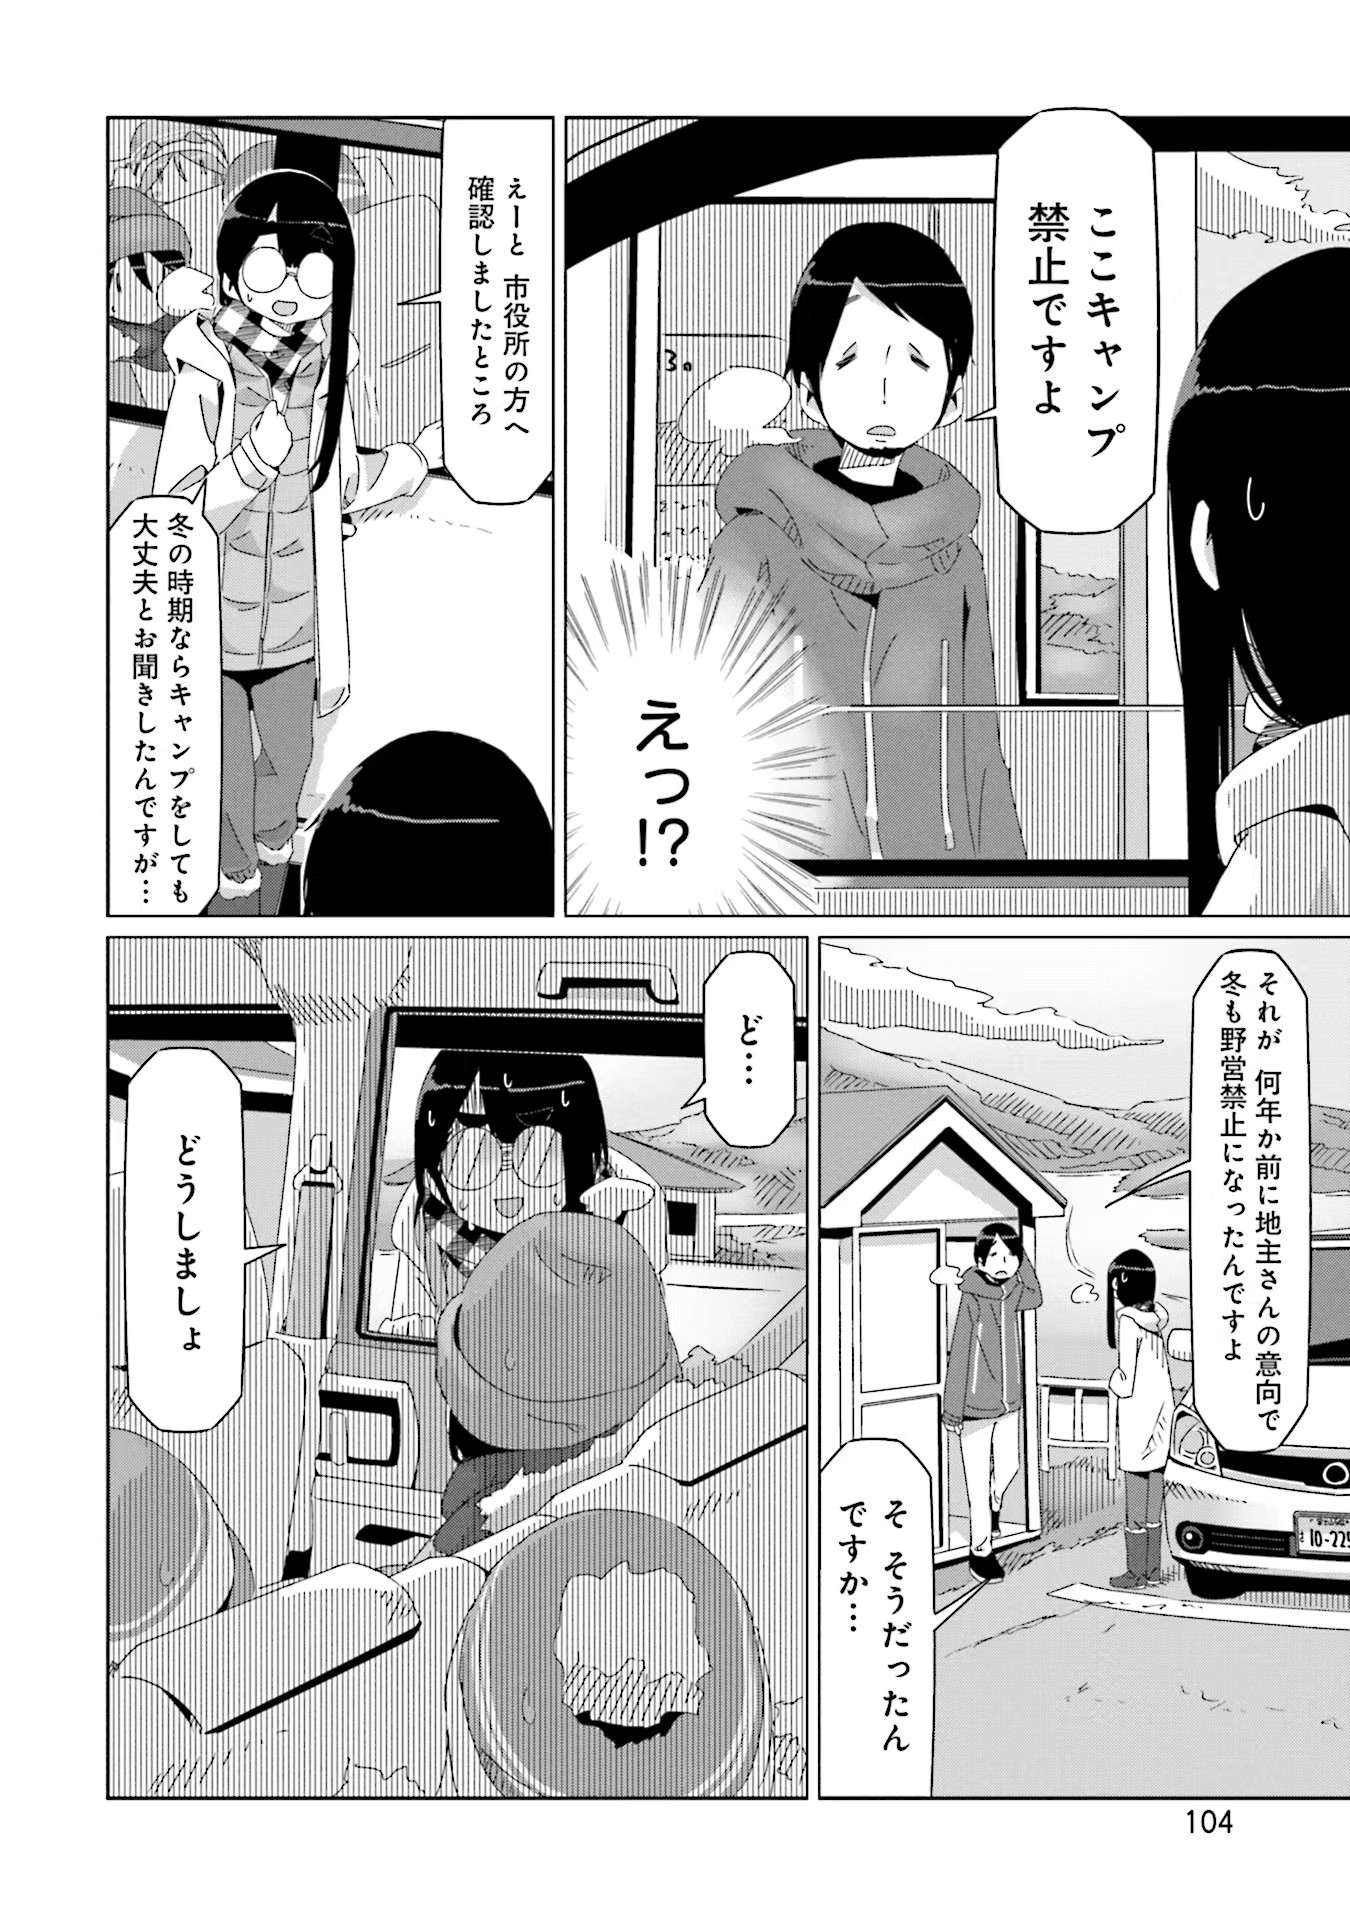 Yuru Camp - Chapter 44 - Page 24